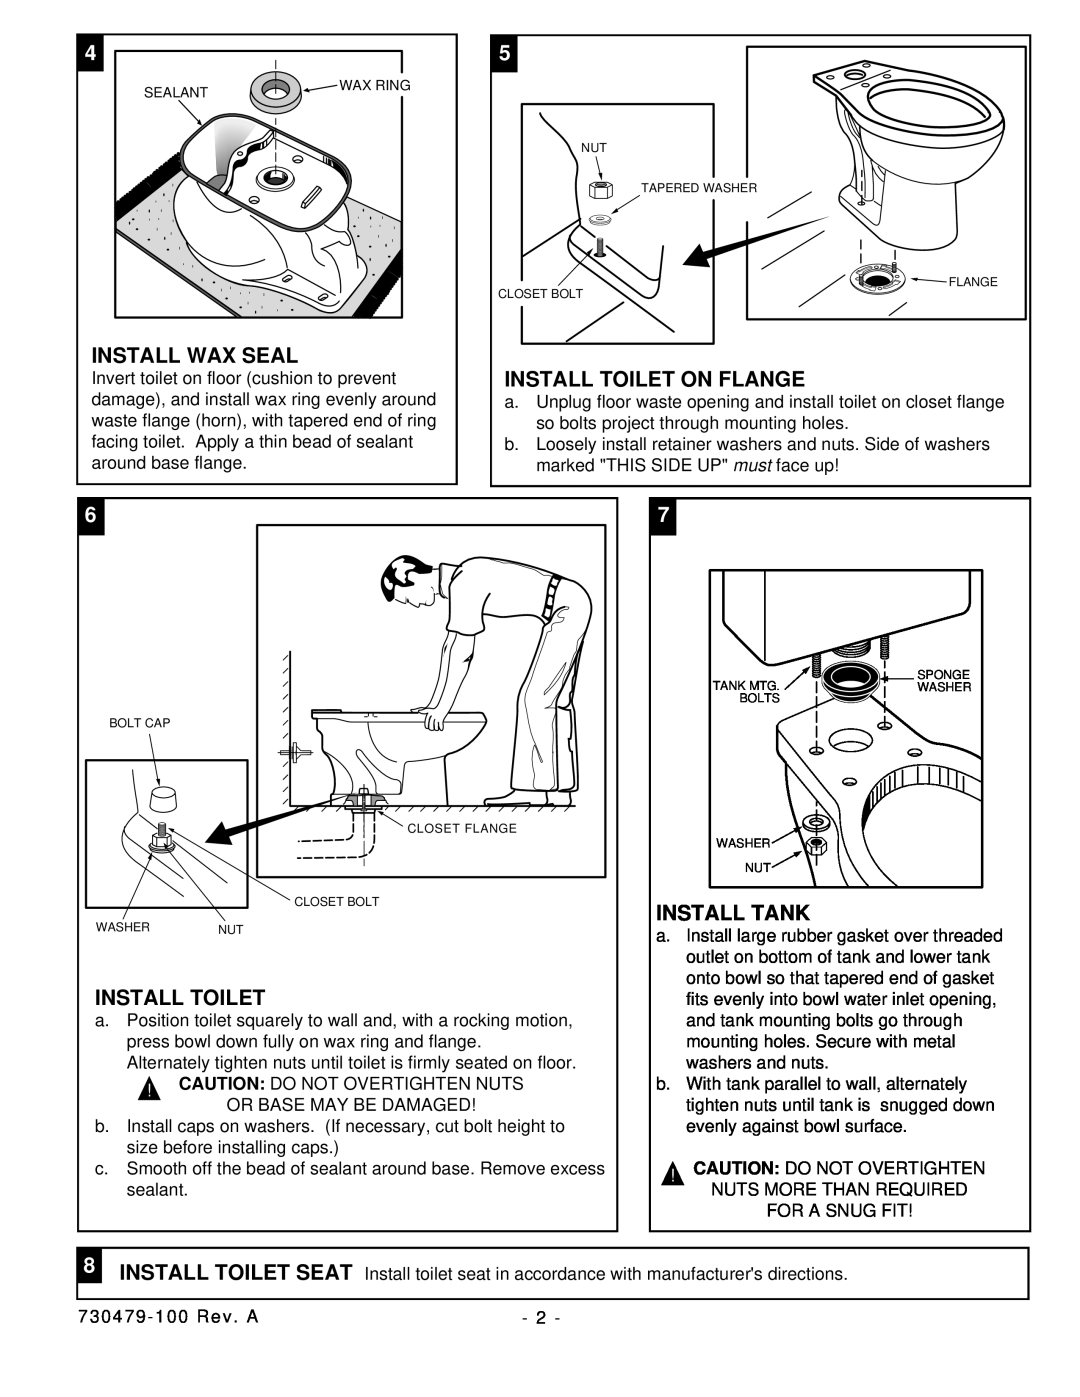 American Standard 2377, 2366 installation instructions Install Wax Seal, Install Toilet On Flange, Install Tank 